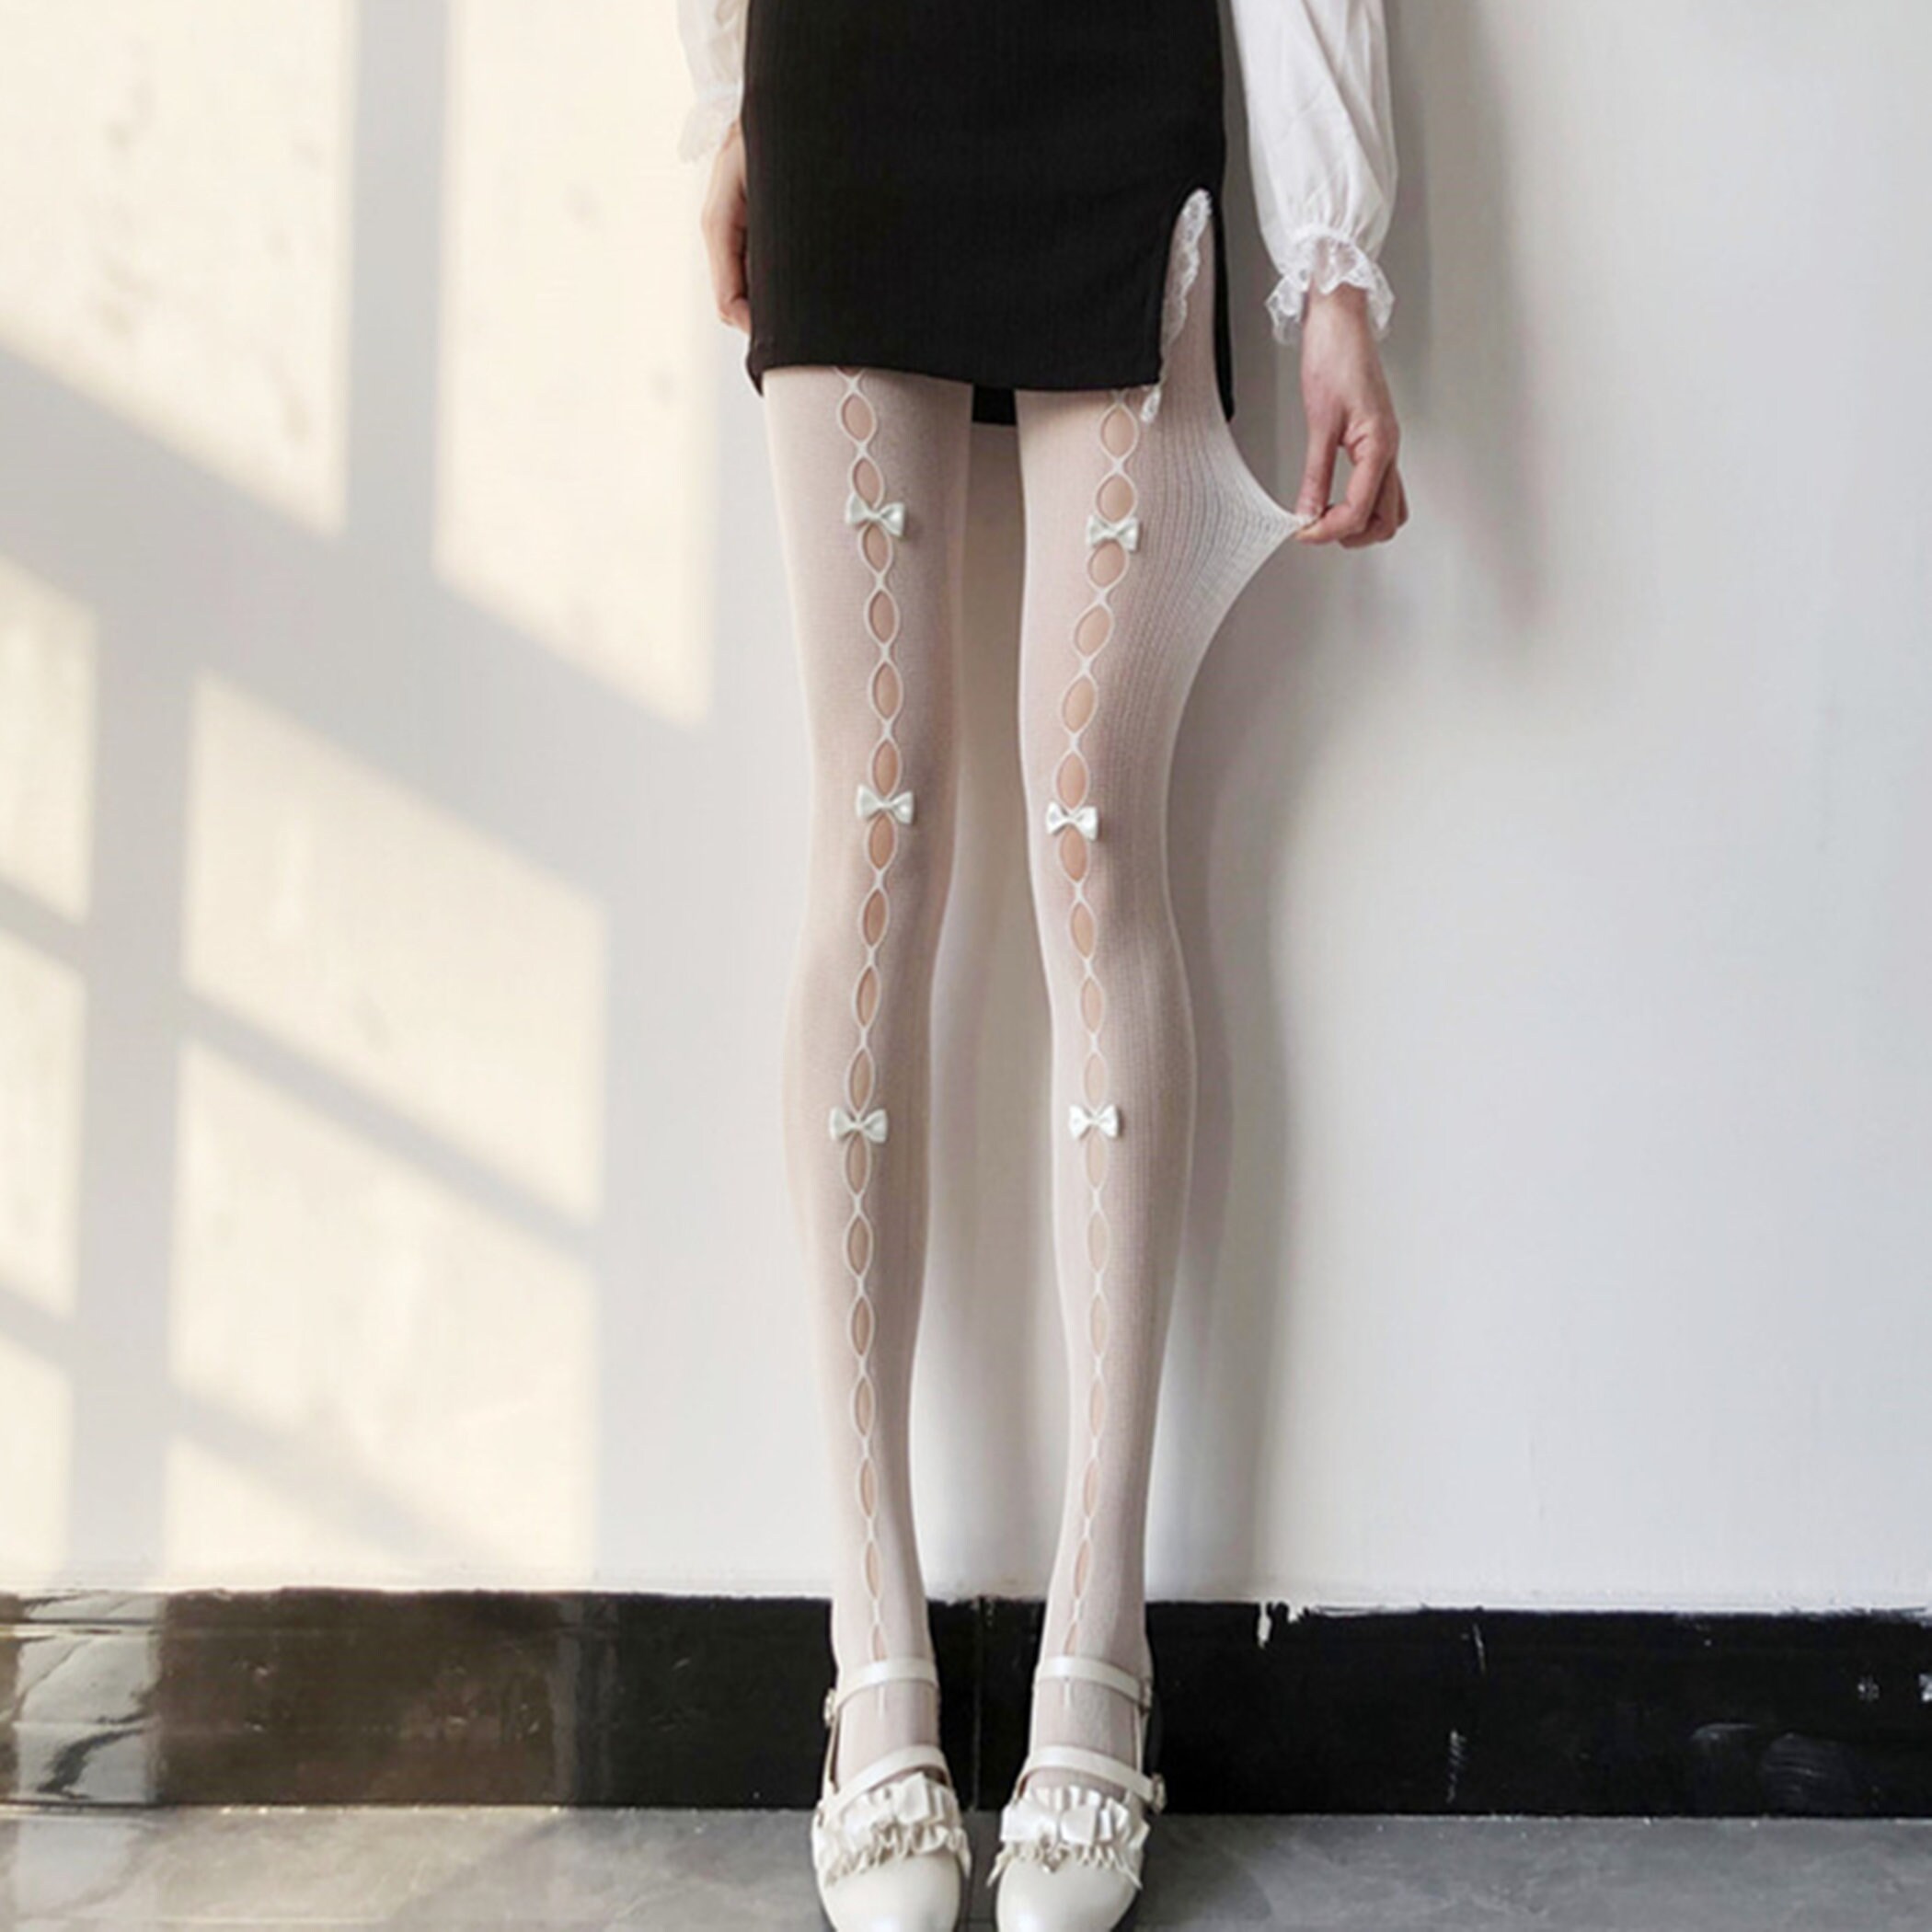 White Hollow Lace SocksPantyhose Lolita TightBowknot | Etsy